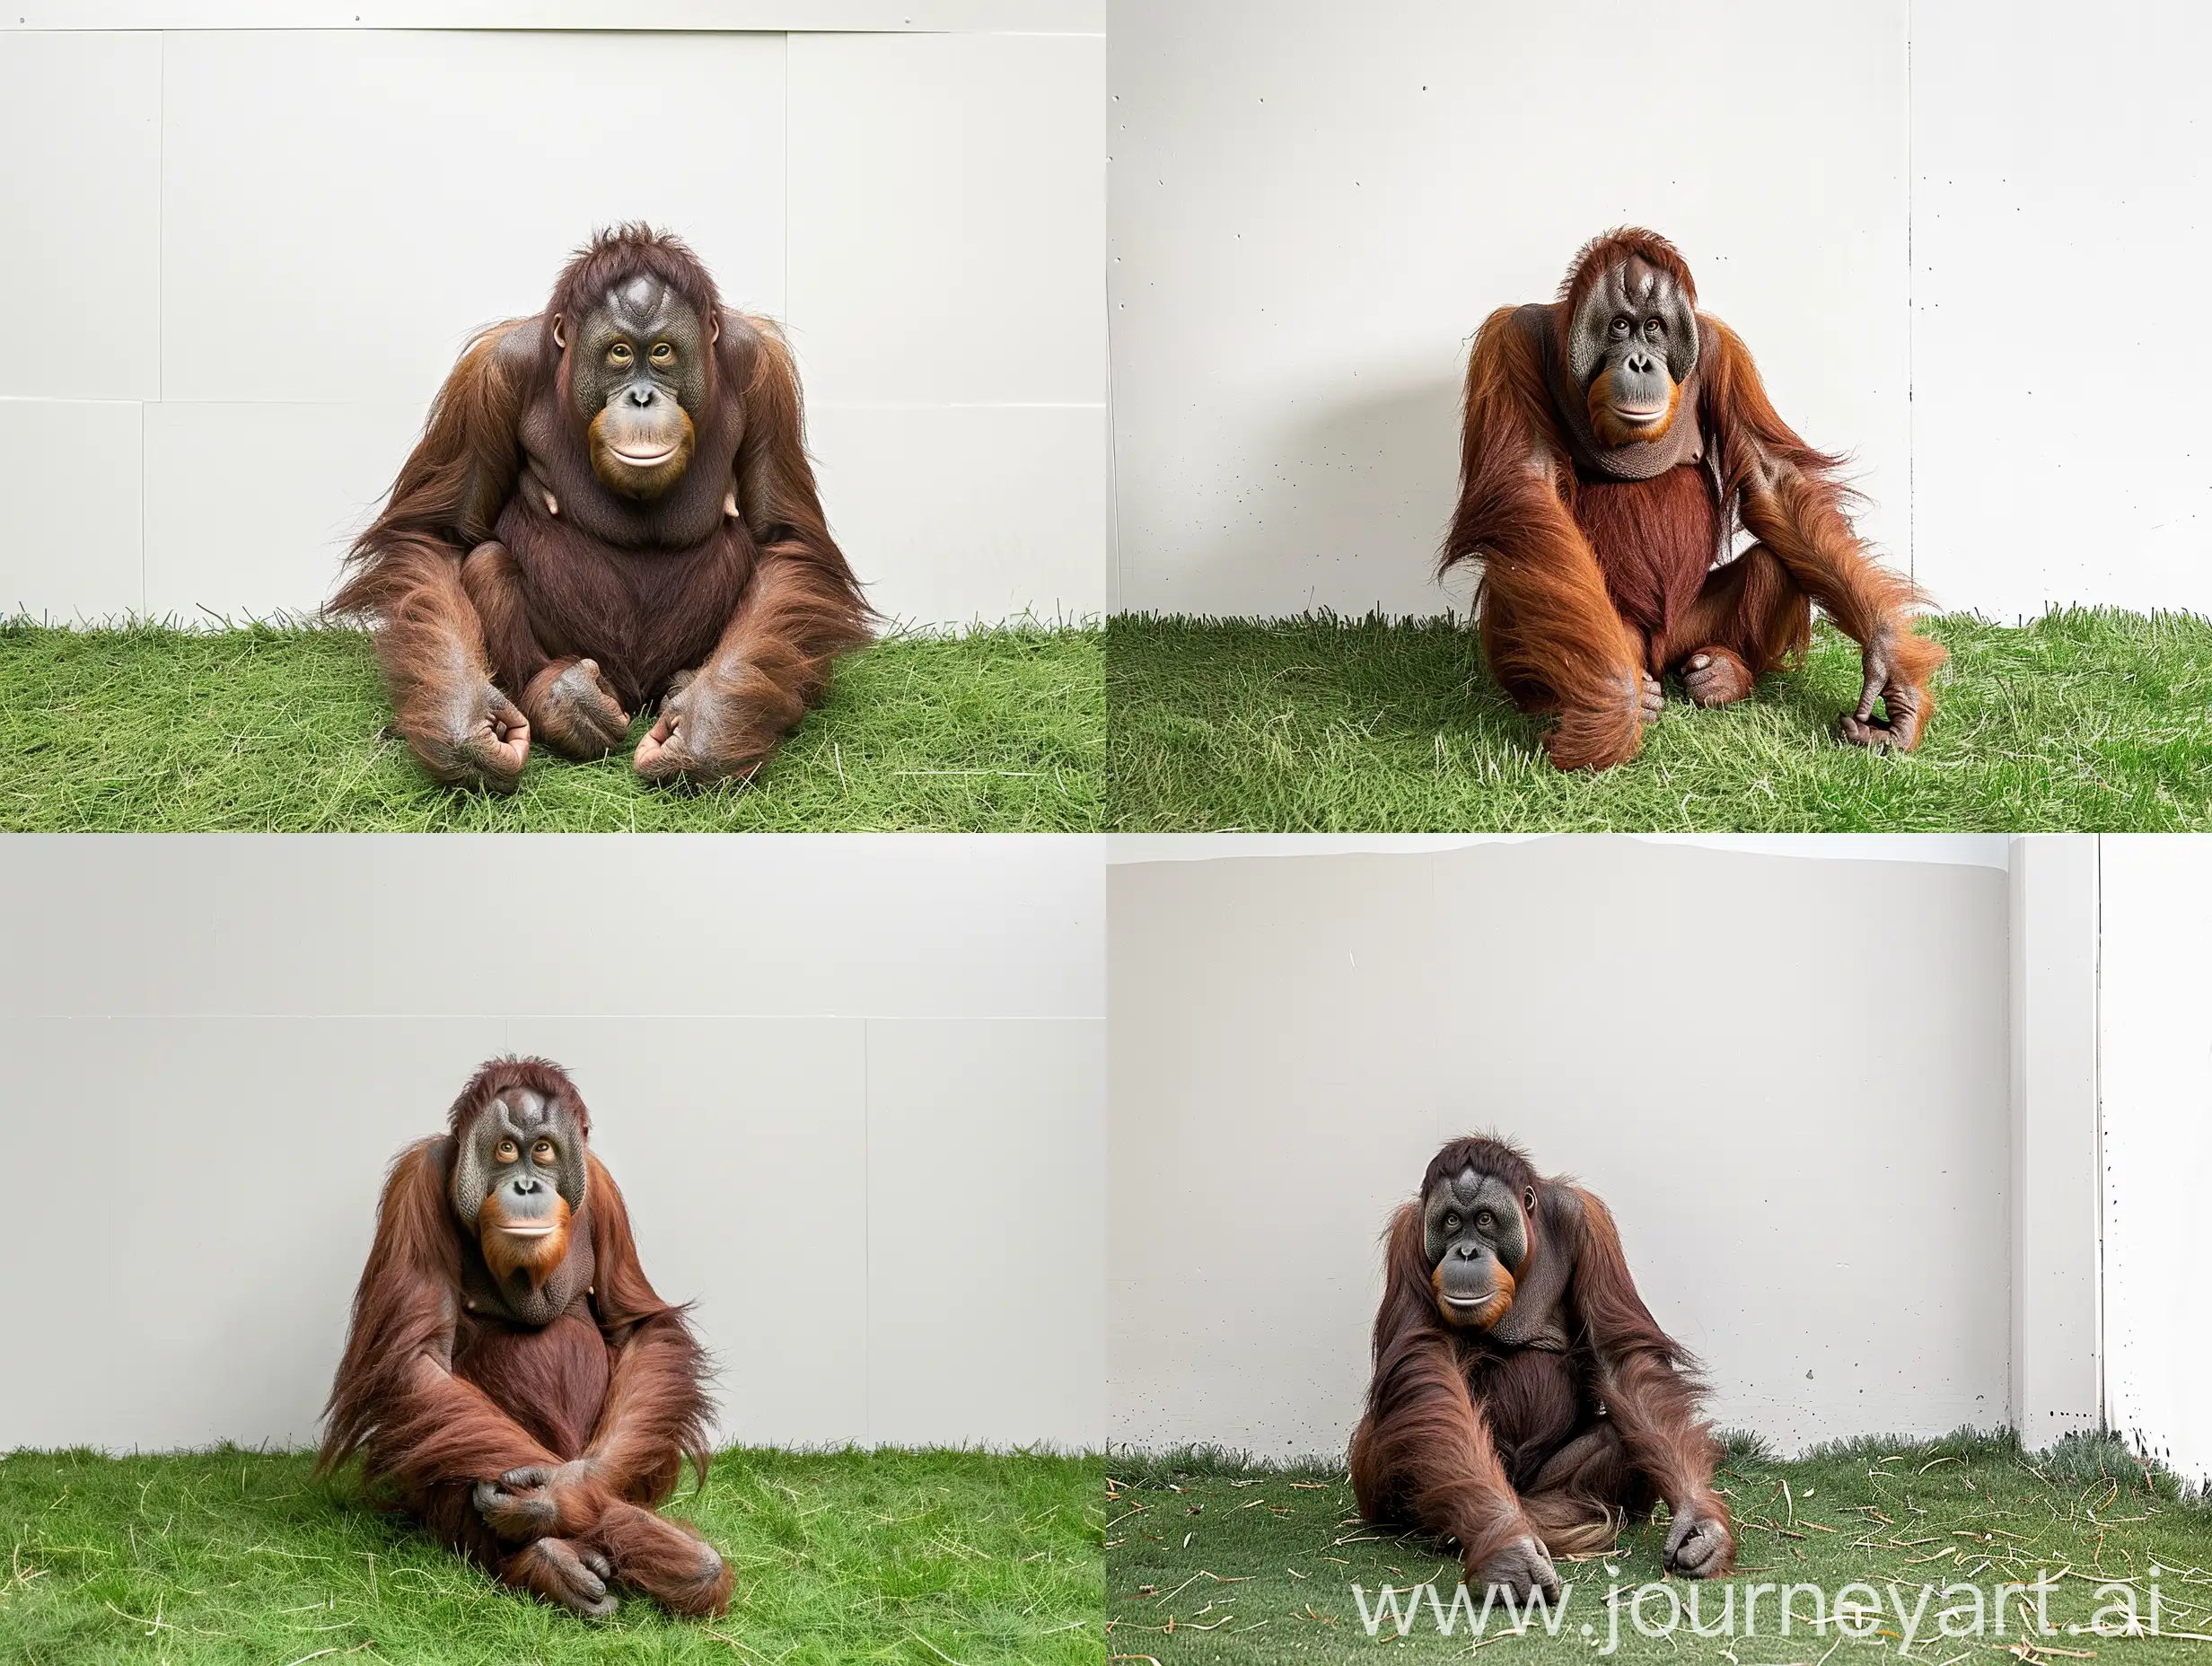 HyperRealistic-Orangutan-Sitting-on-Grass-Against-White-Wall